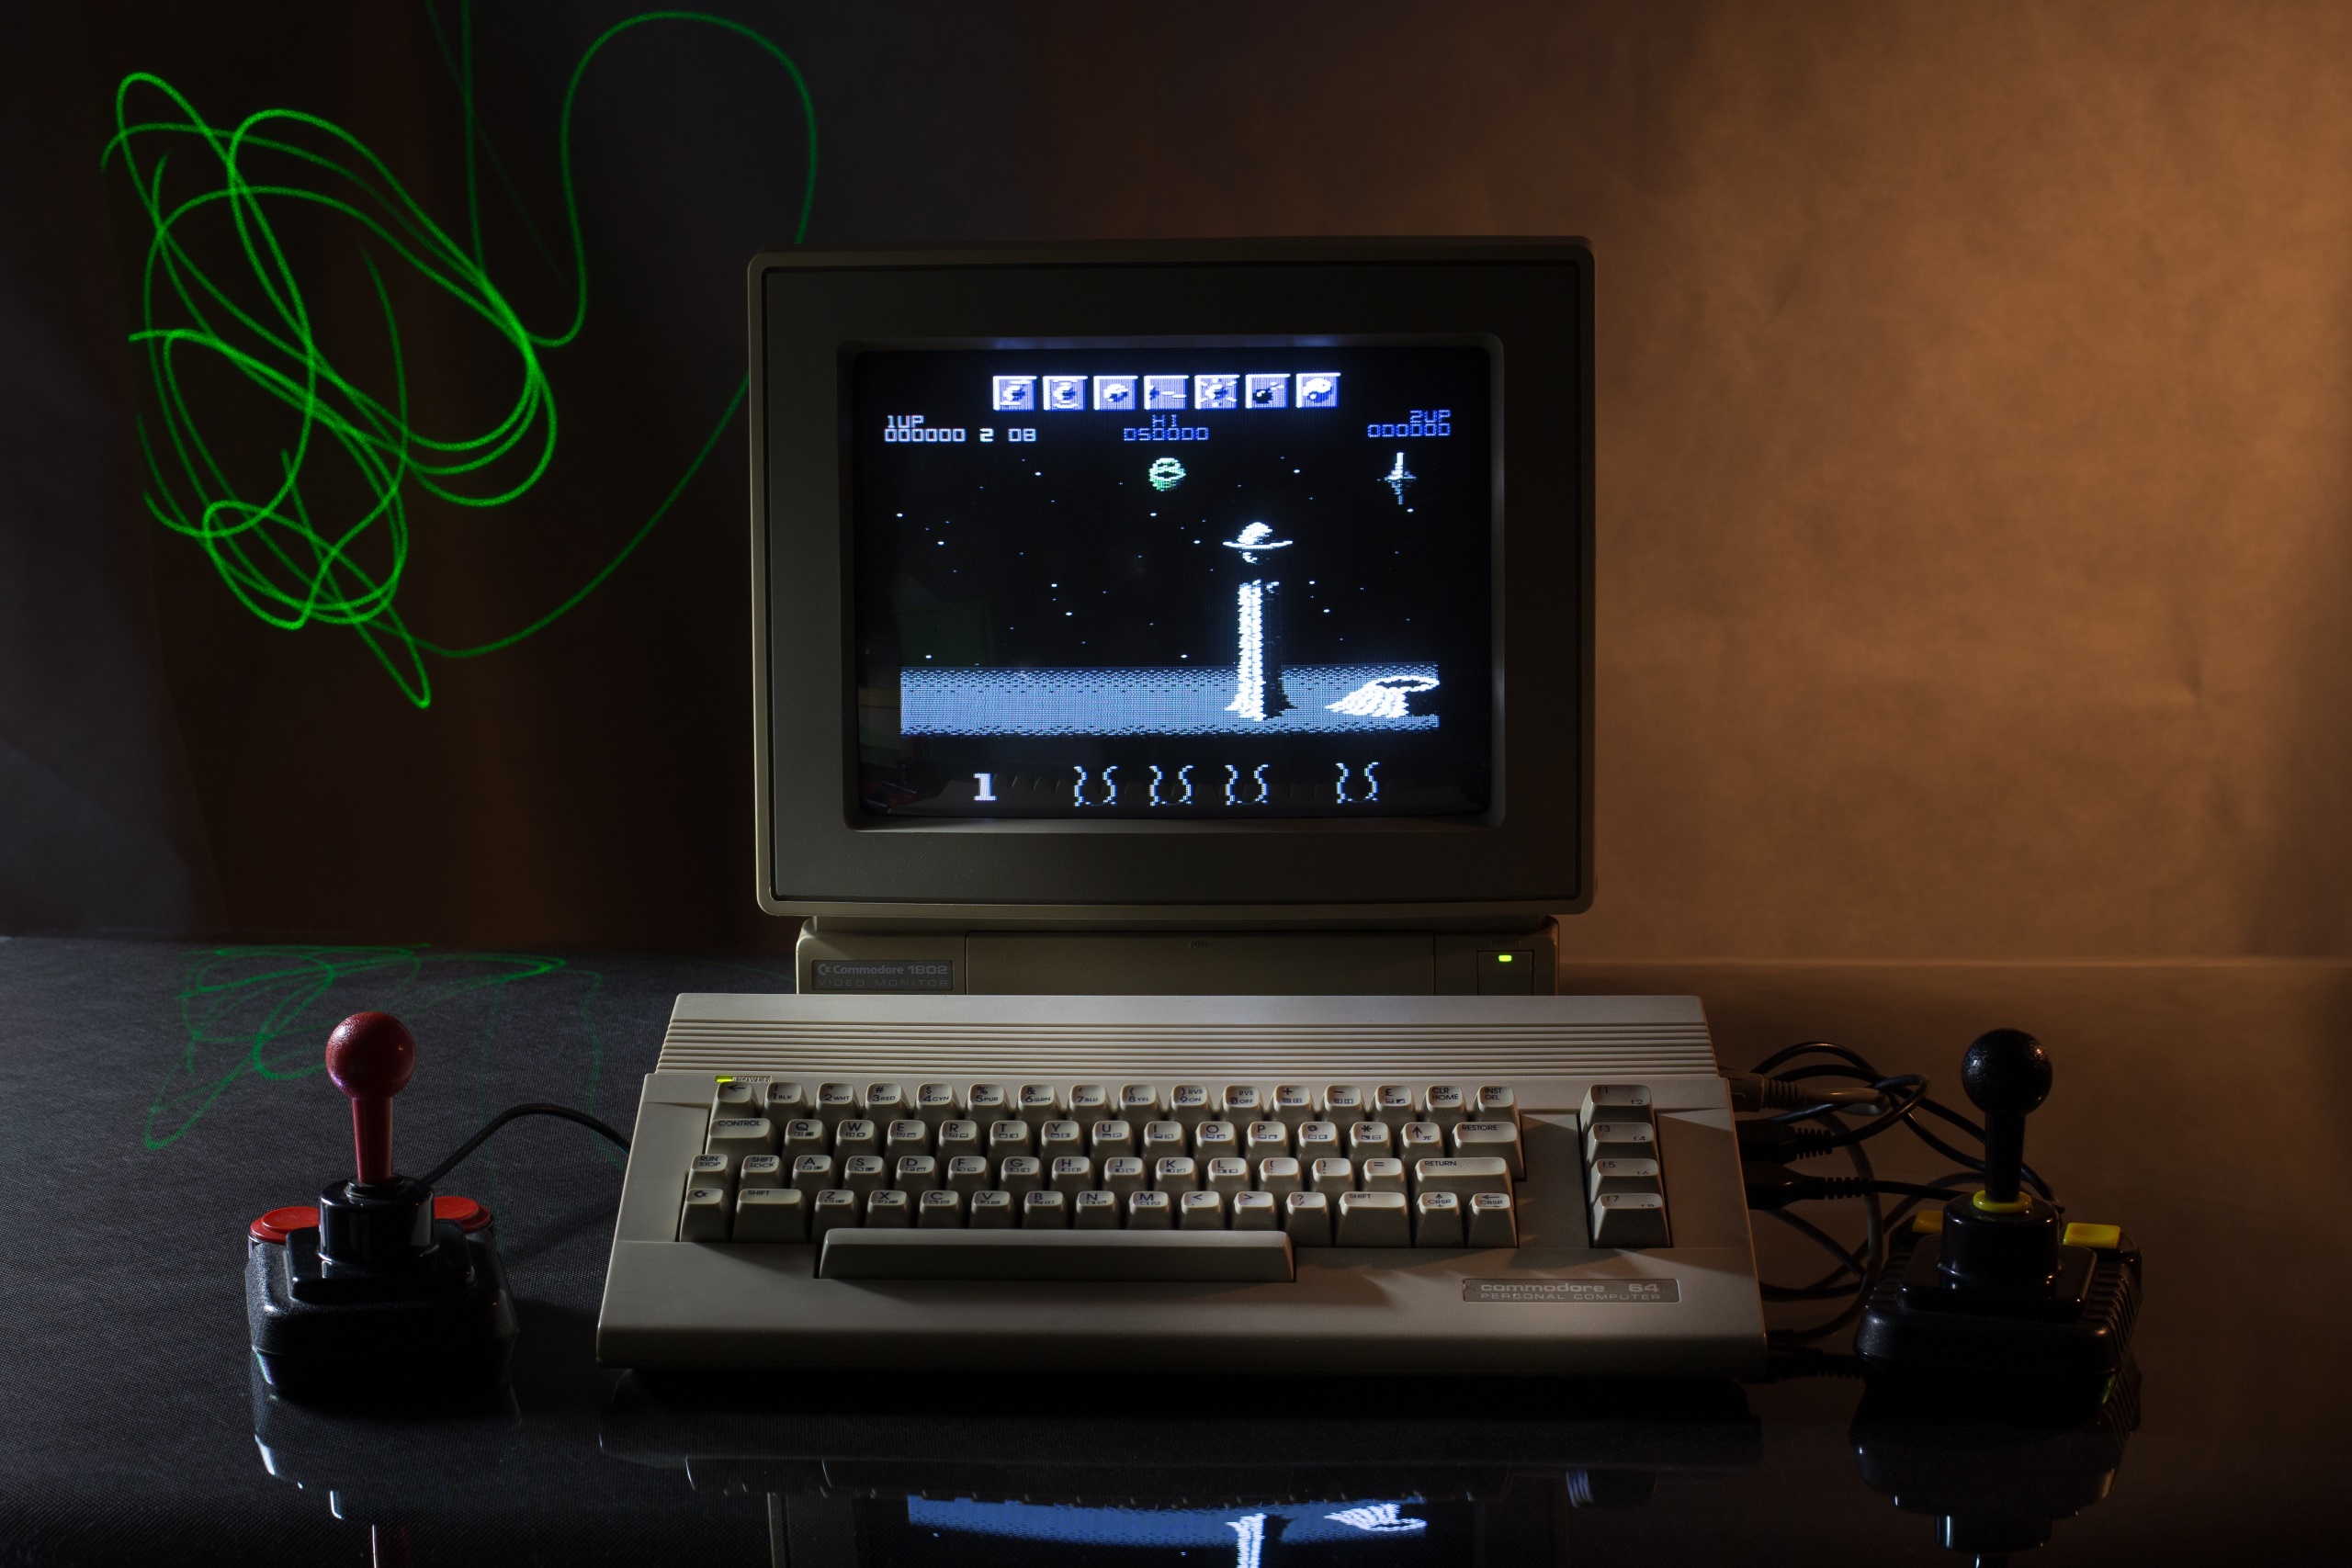 General 2560x1707 retro games computer joystick Commodore 64 mechanical keyboard